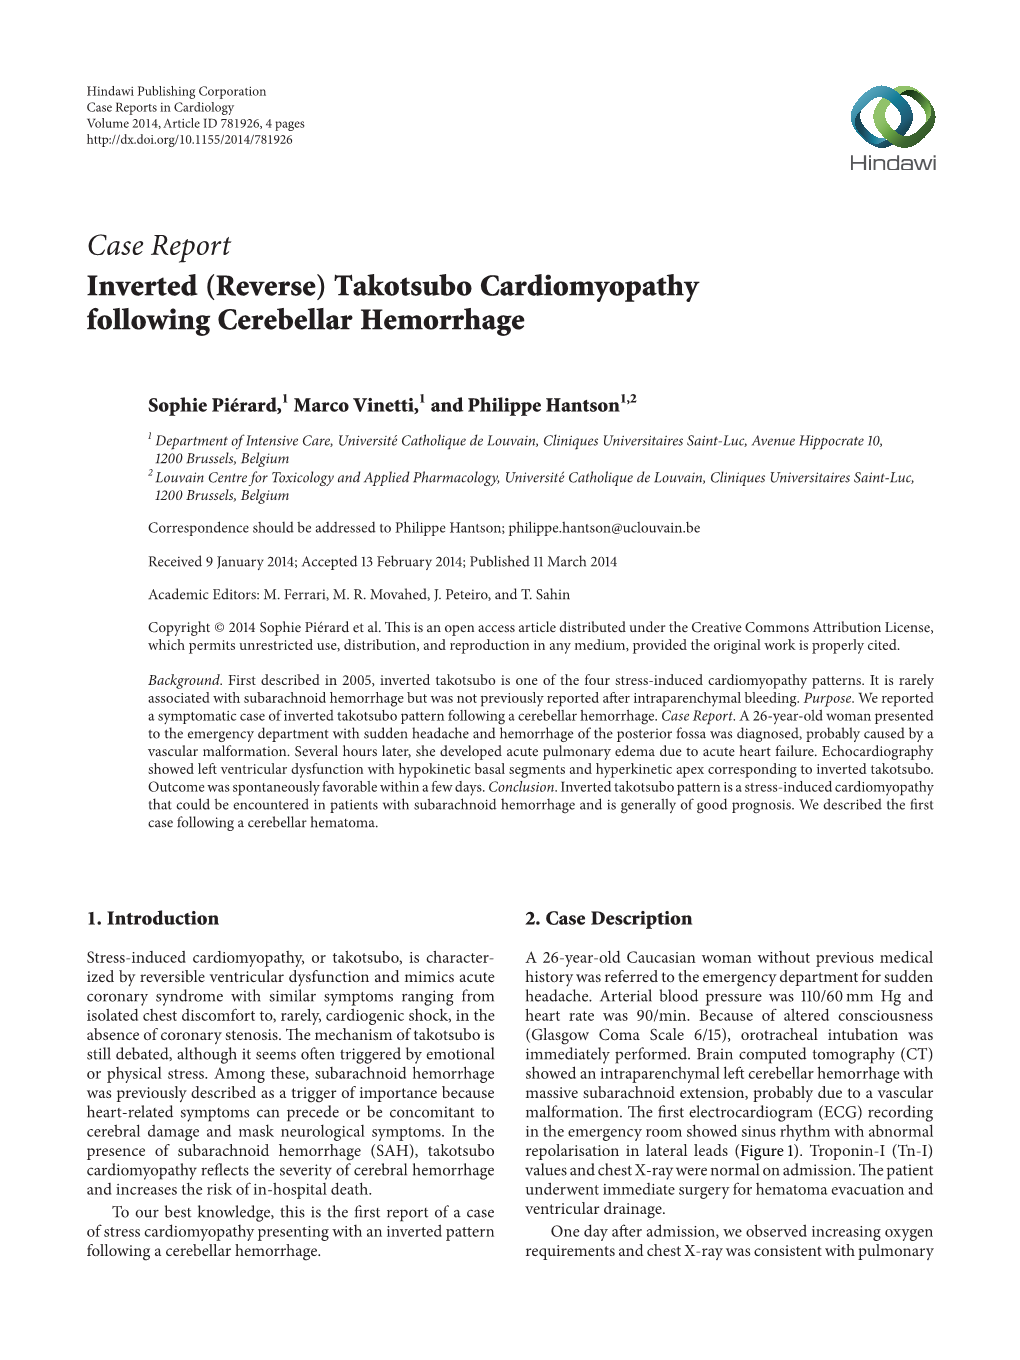 Inverted (Reverse) Takotsubo Cardiomyopathy Following Cerebellar Hemorrhage